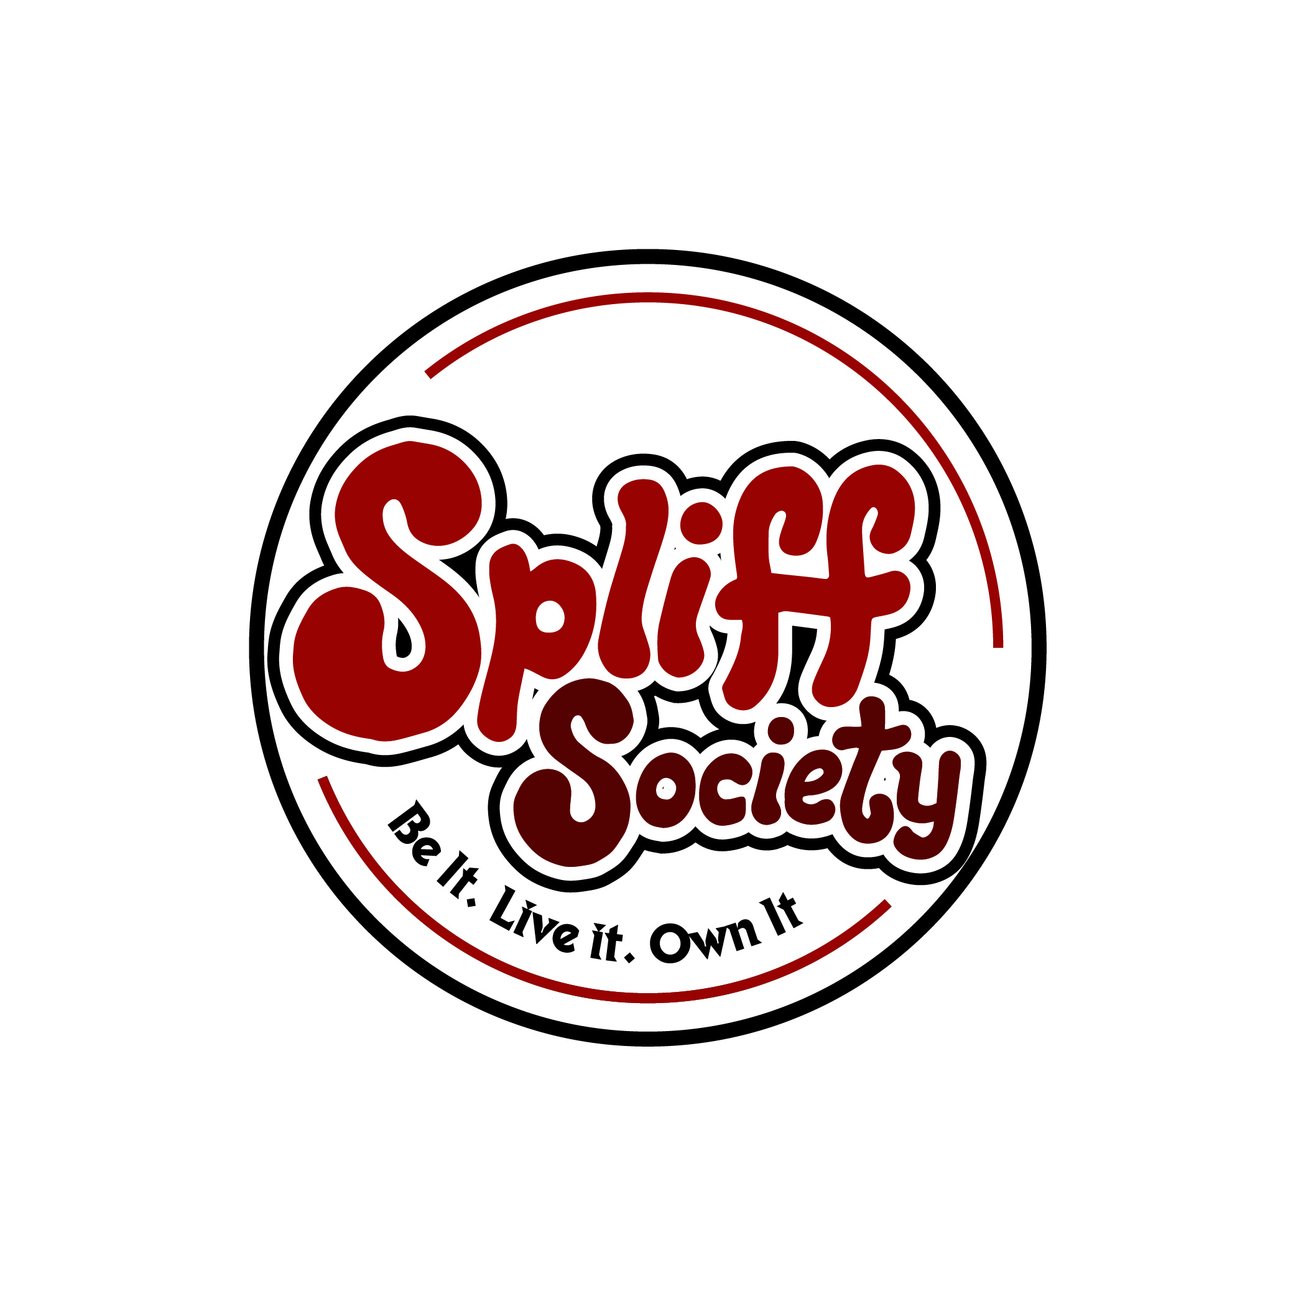 Spliff Society